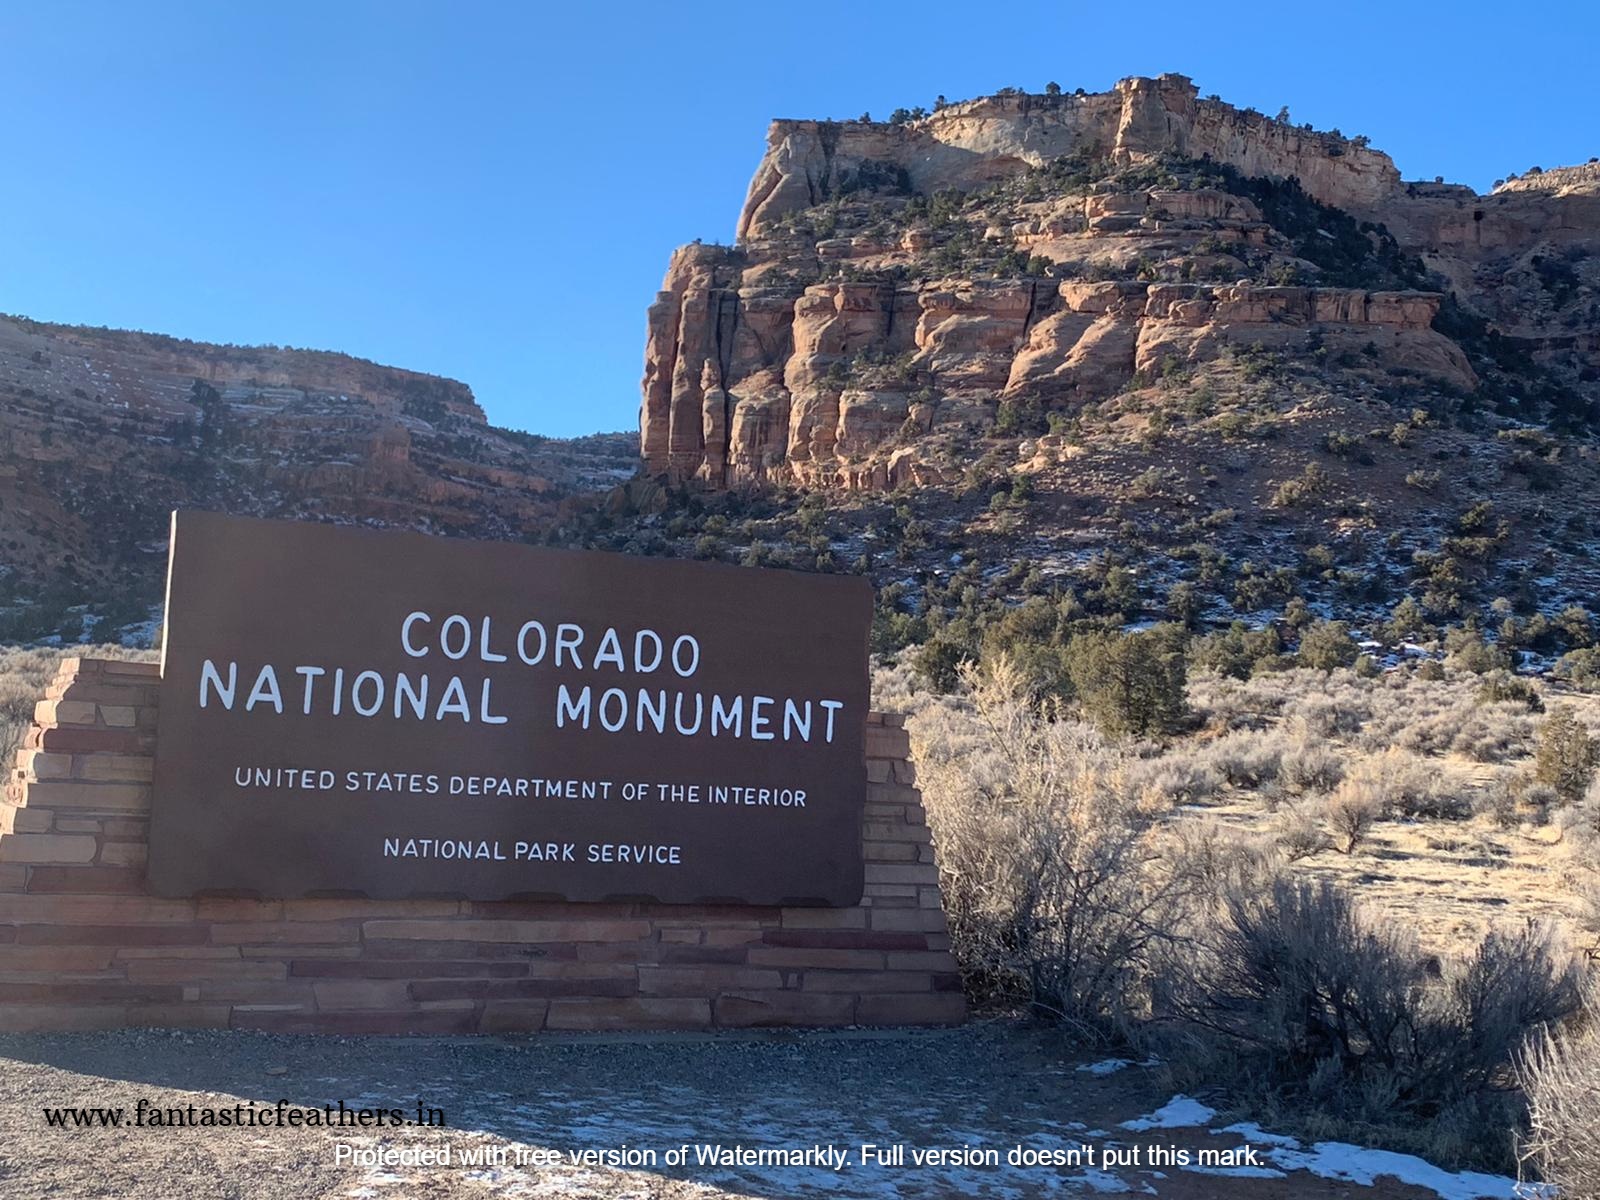 Rock Climbing - Colorado National Monument (U.S. National Park Service)